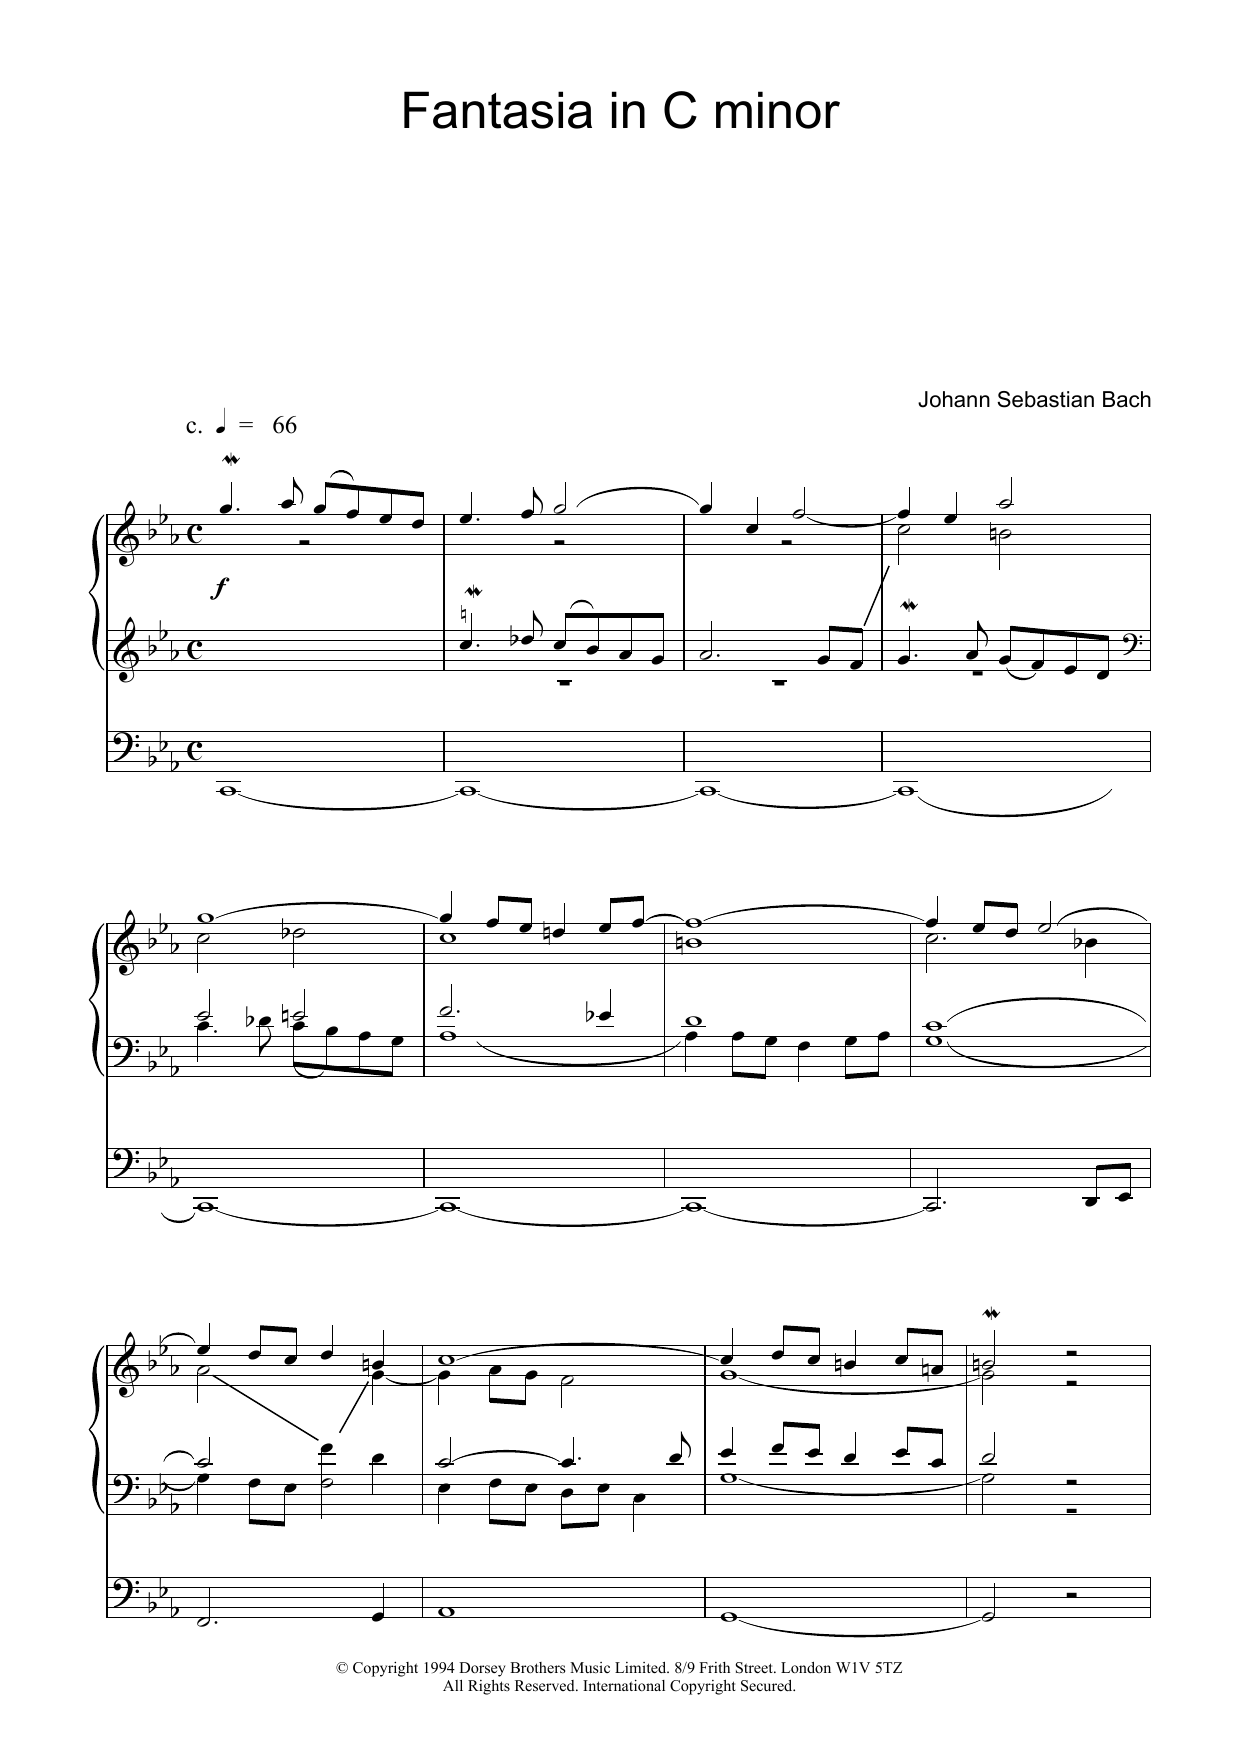 Johann Sebastian Bach Fantasia and Fugue in C Minor, BWV 537 Sheet Music Notes & Chords for Organ - Download or Print PDF